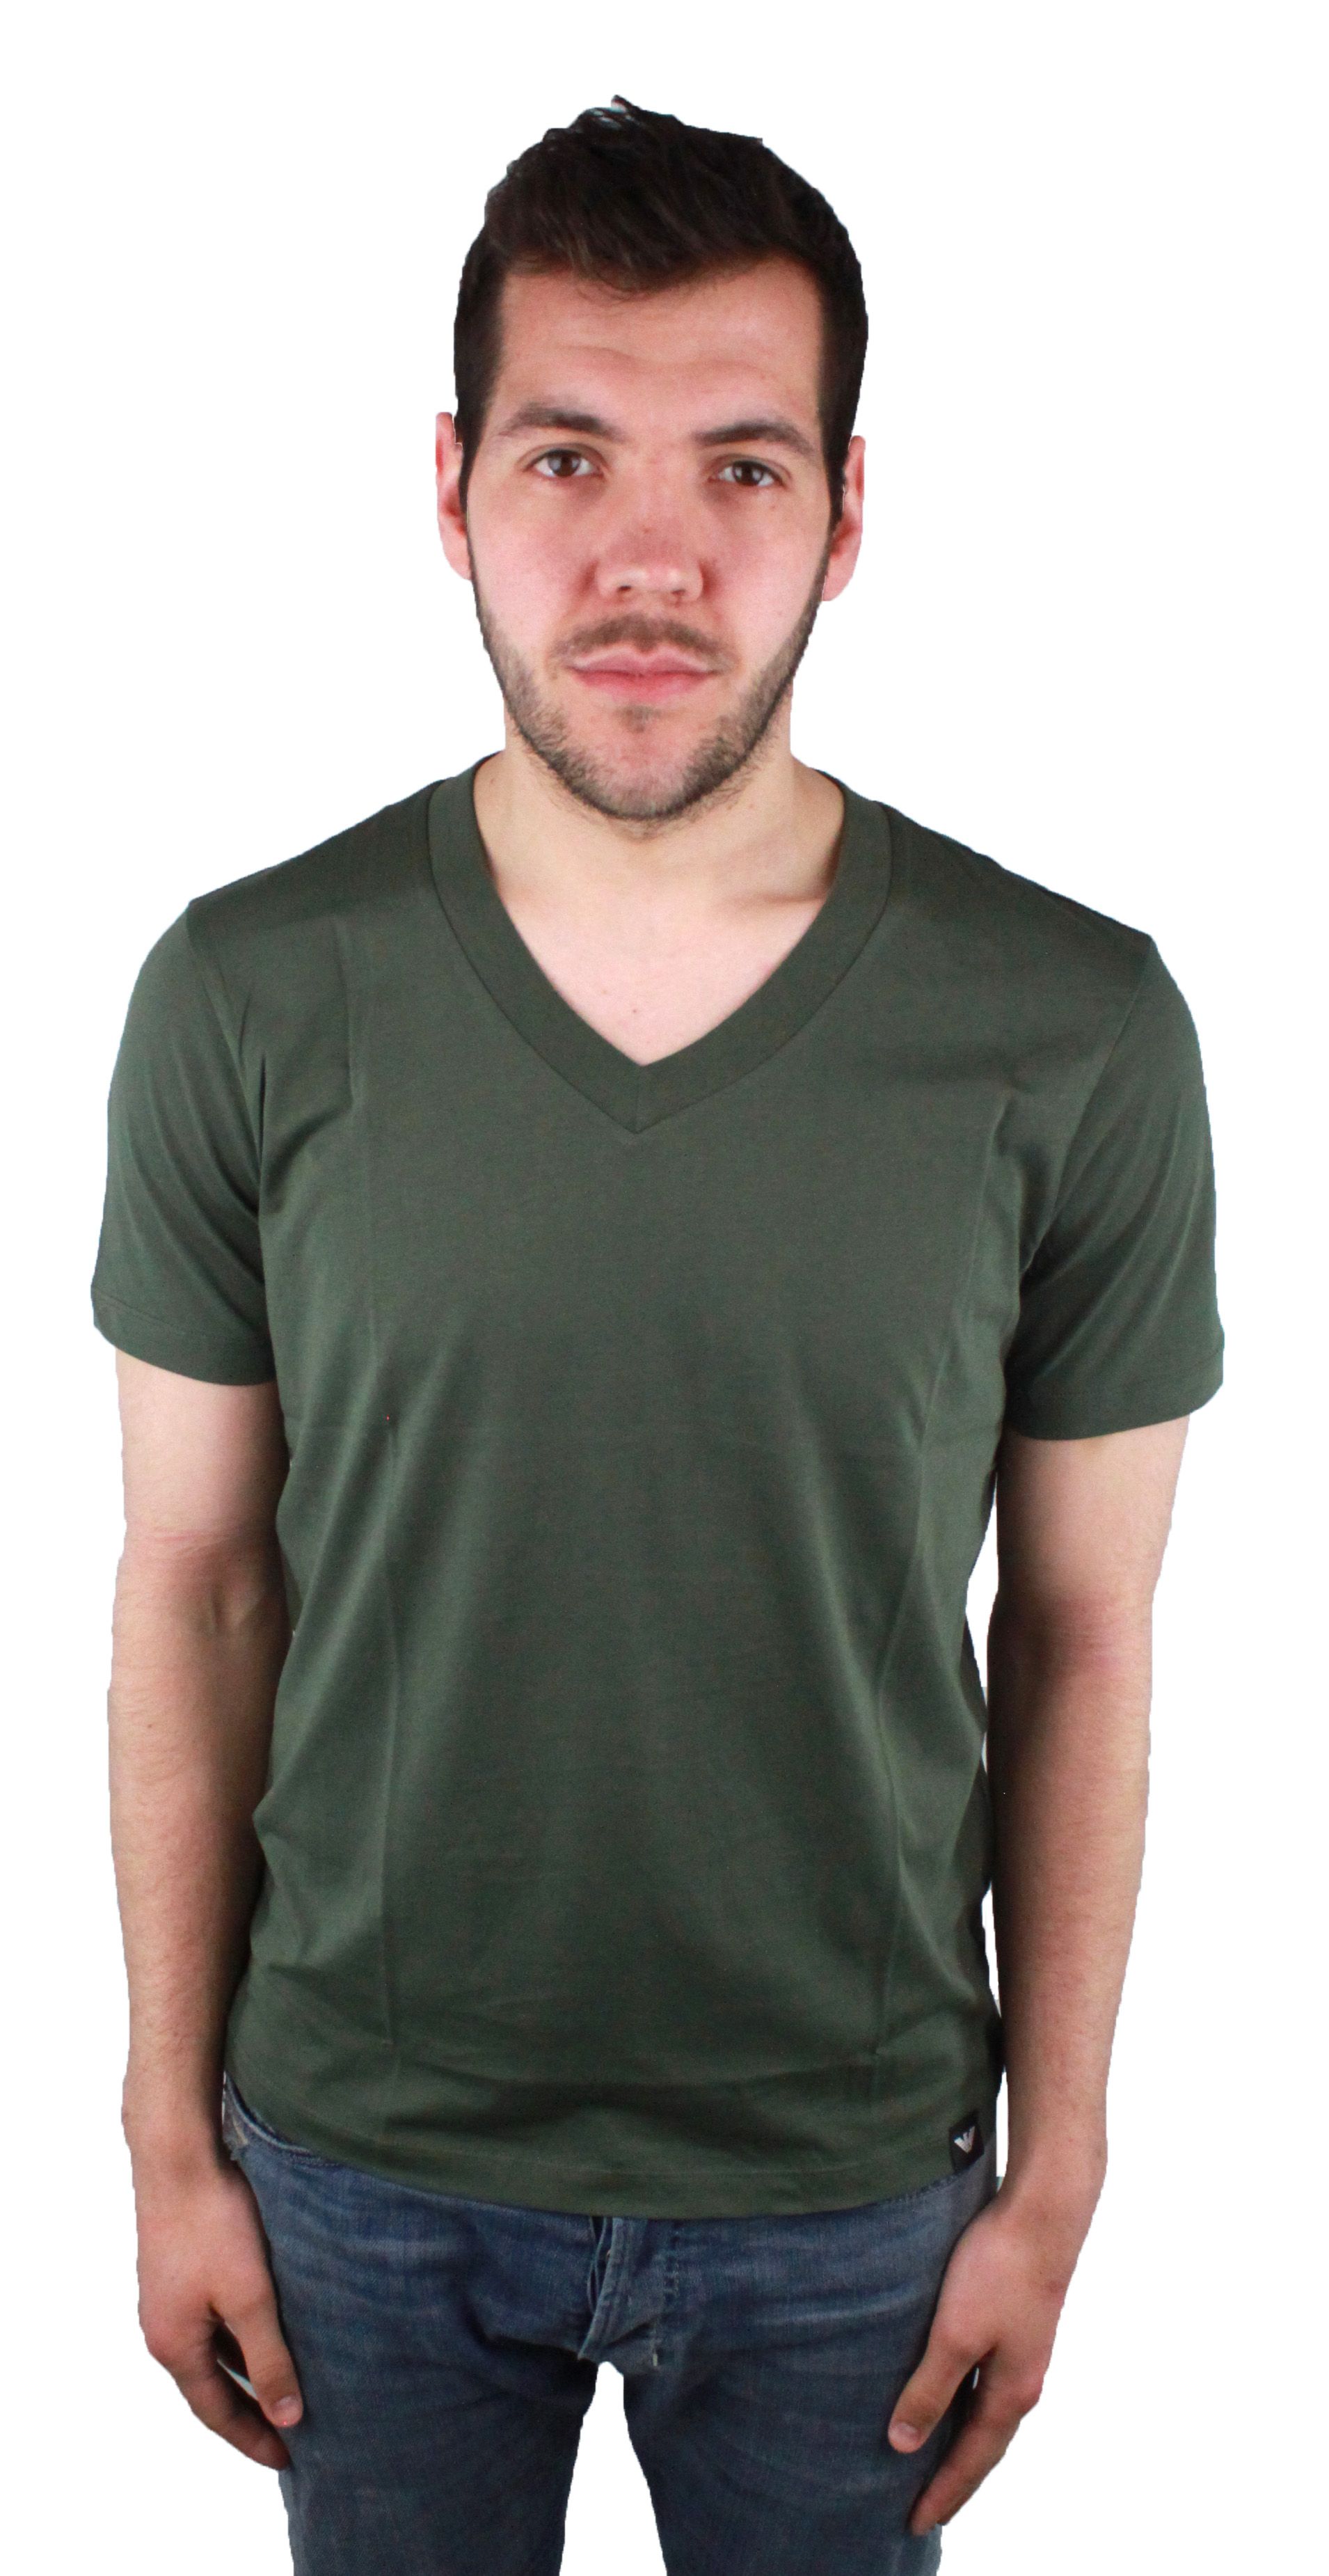 Emporio Armani 3Z1T77 0544 T-Shirt. Short Sleeved Green T-Shirt. Logo On Front Bottom Left. 100% Cotton. Style: 3Z1T77 1JPZZ. Crew Neck